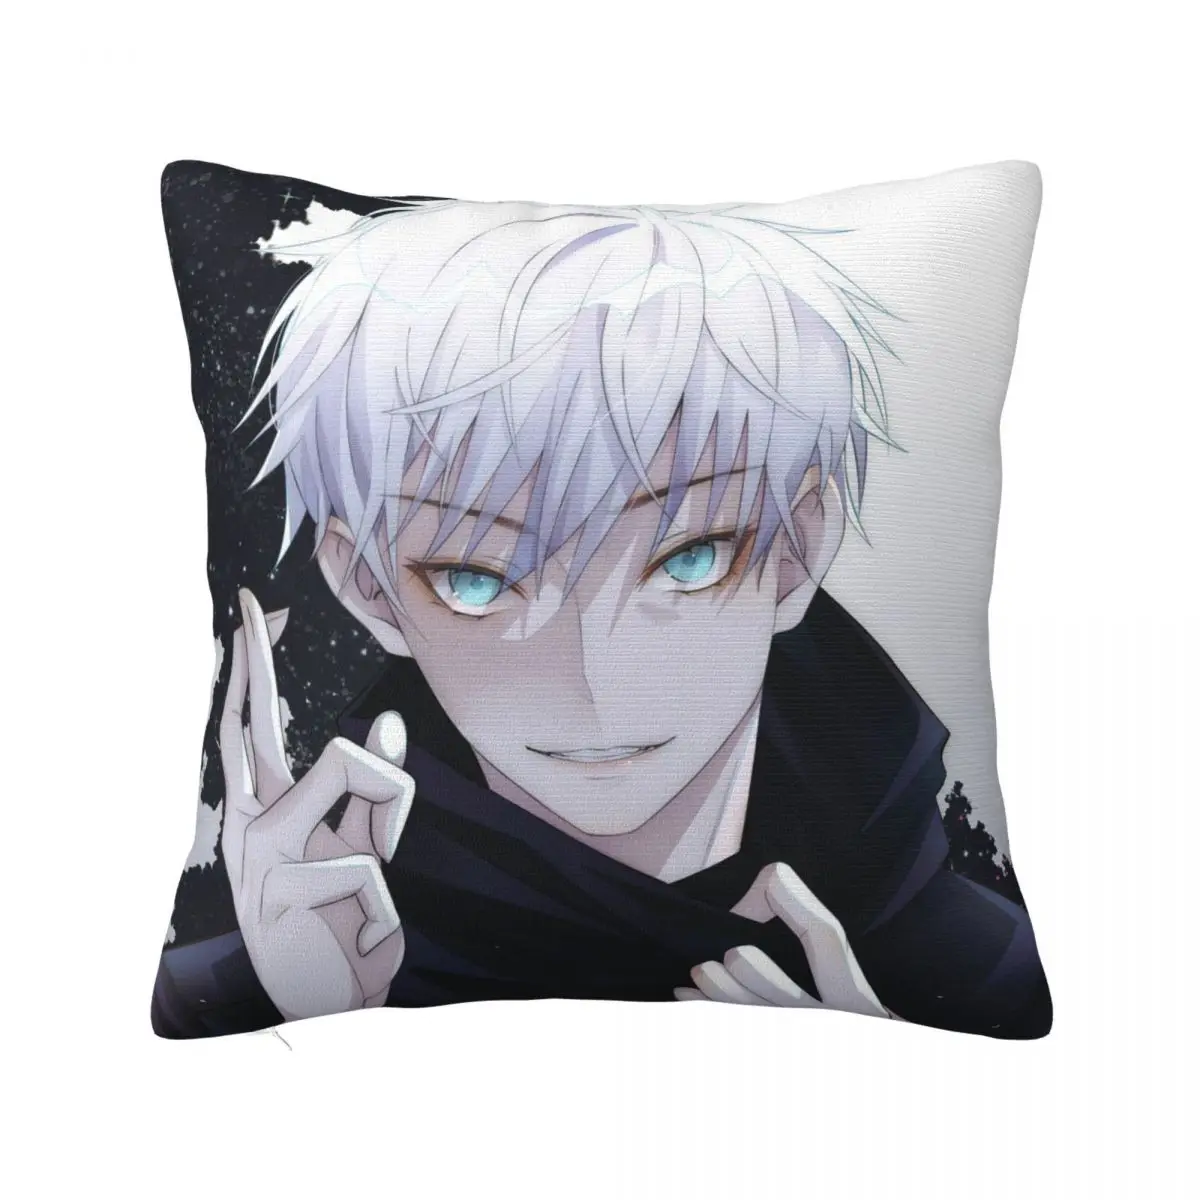 

Gojo Satoru Collage Manga Pillowcase Printing Cushion Cover Decoration Anime Throw Pillow Case Cover Home Square 40*40cm